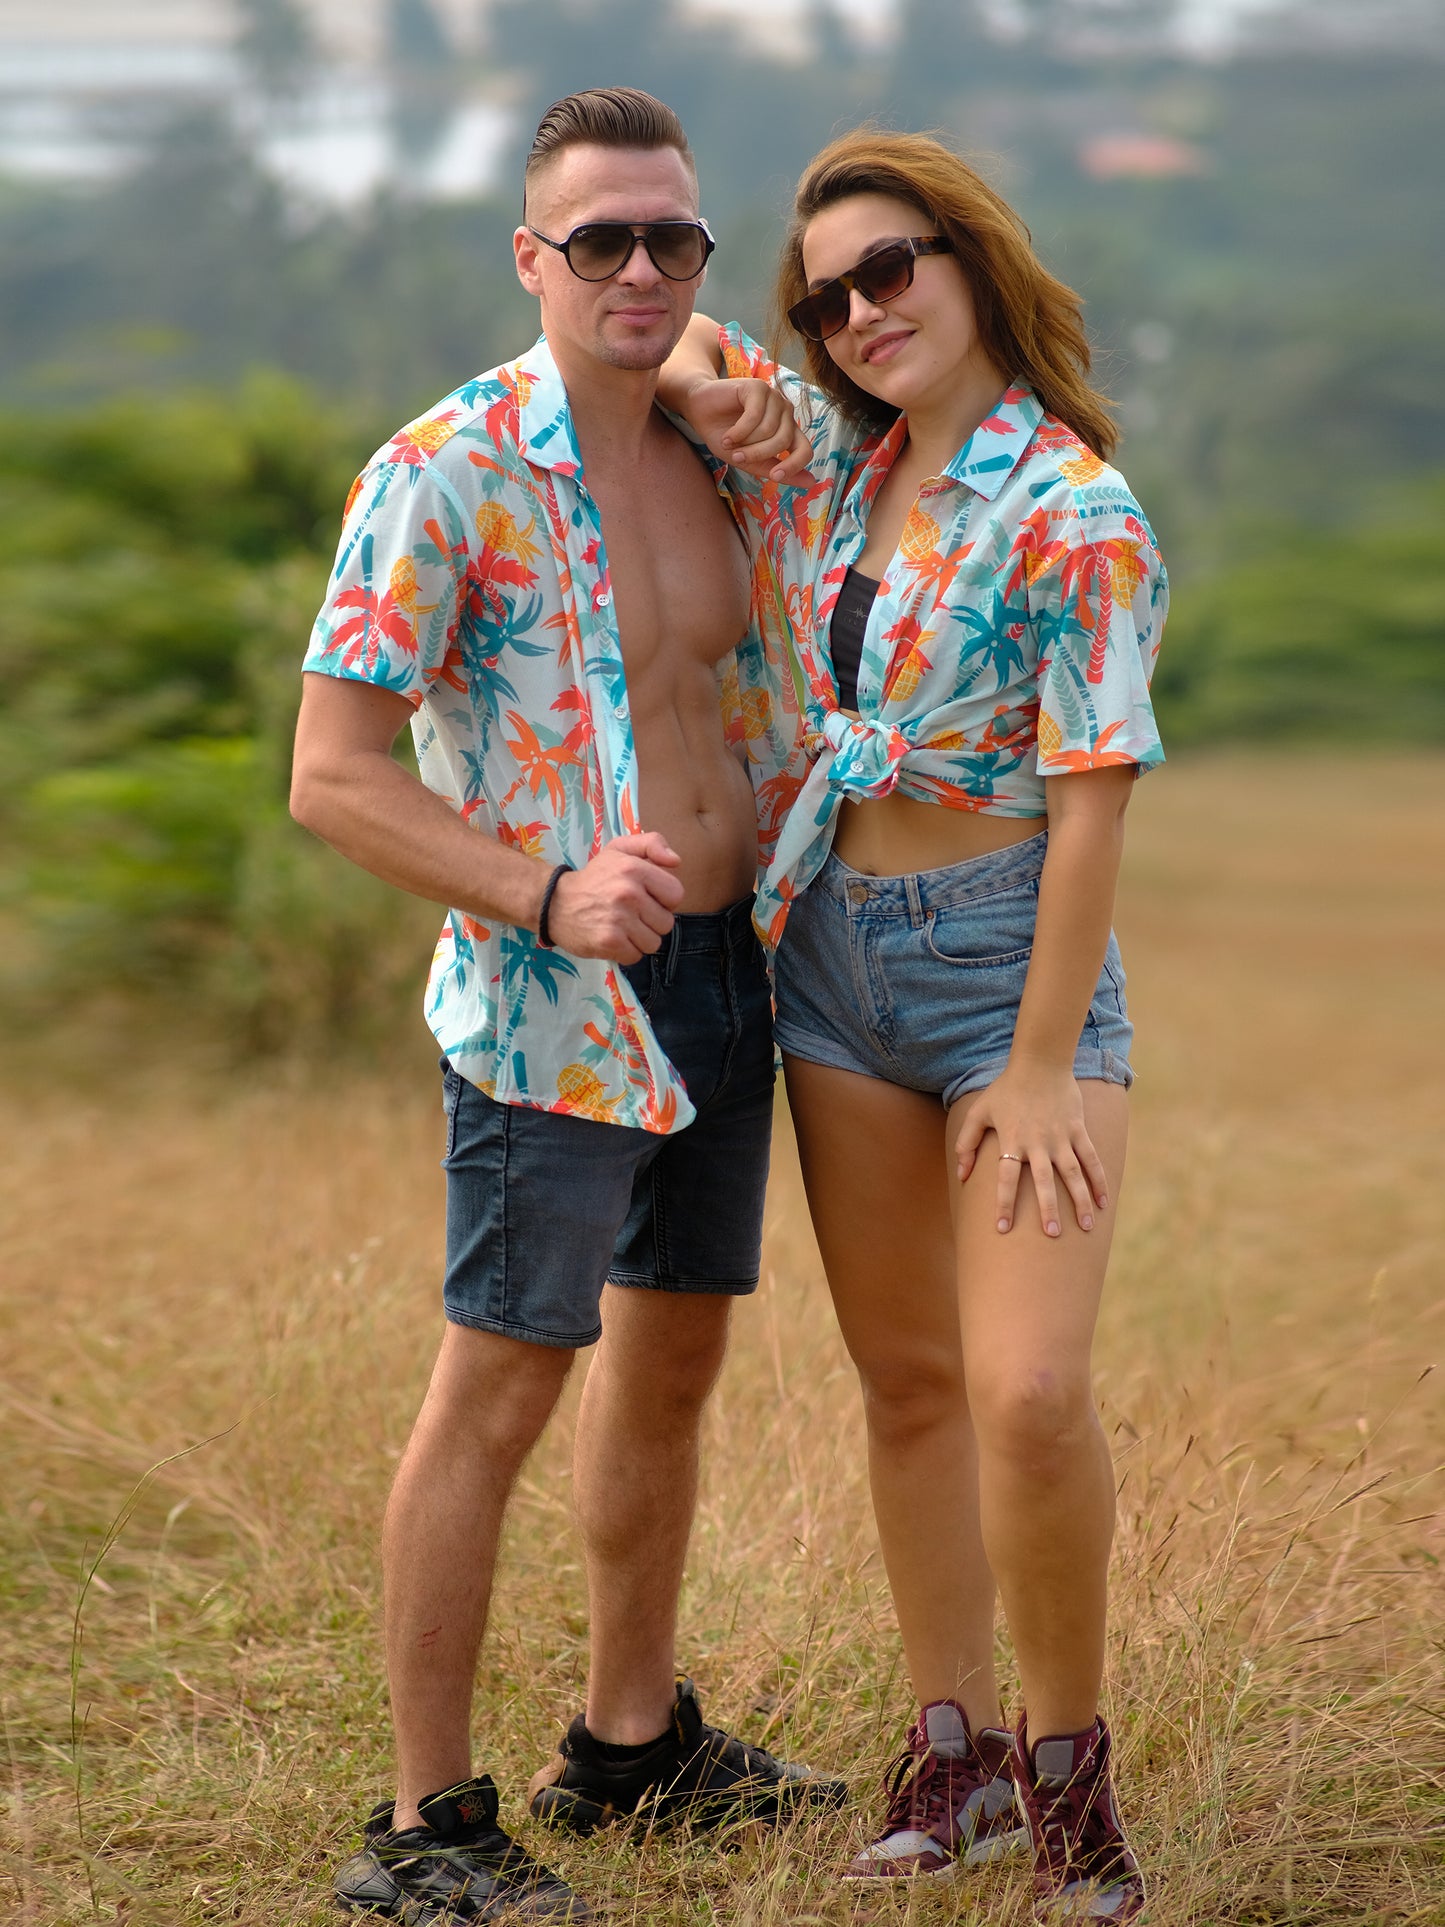 Men's Tropical Oversize Printed Travel Shirt